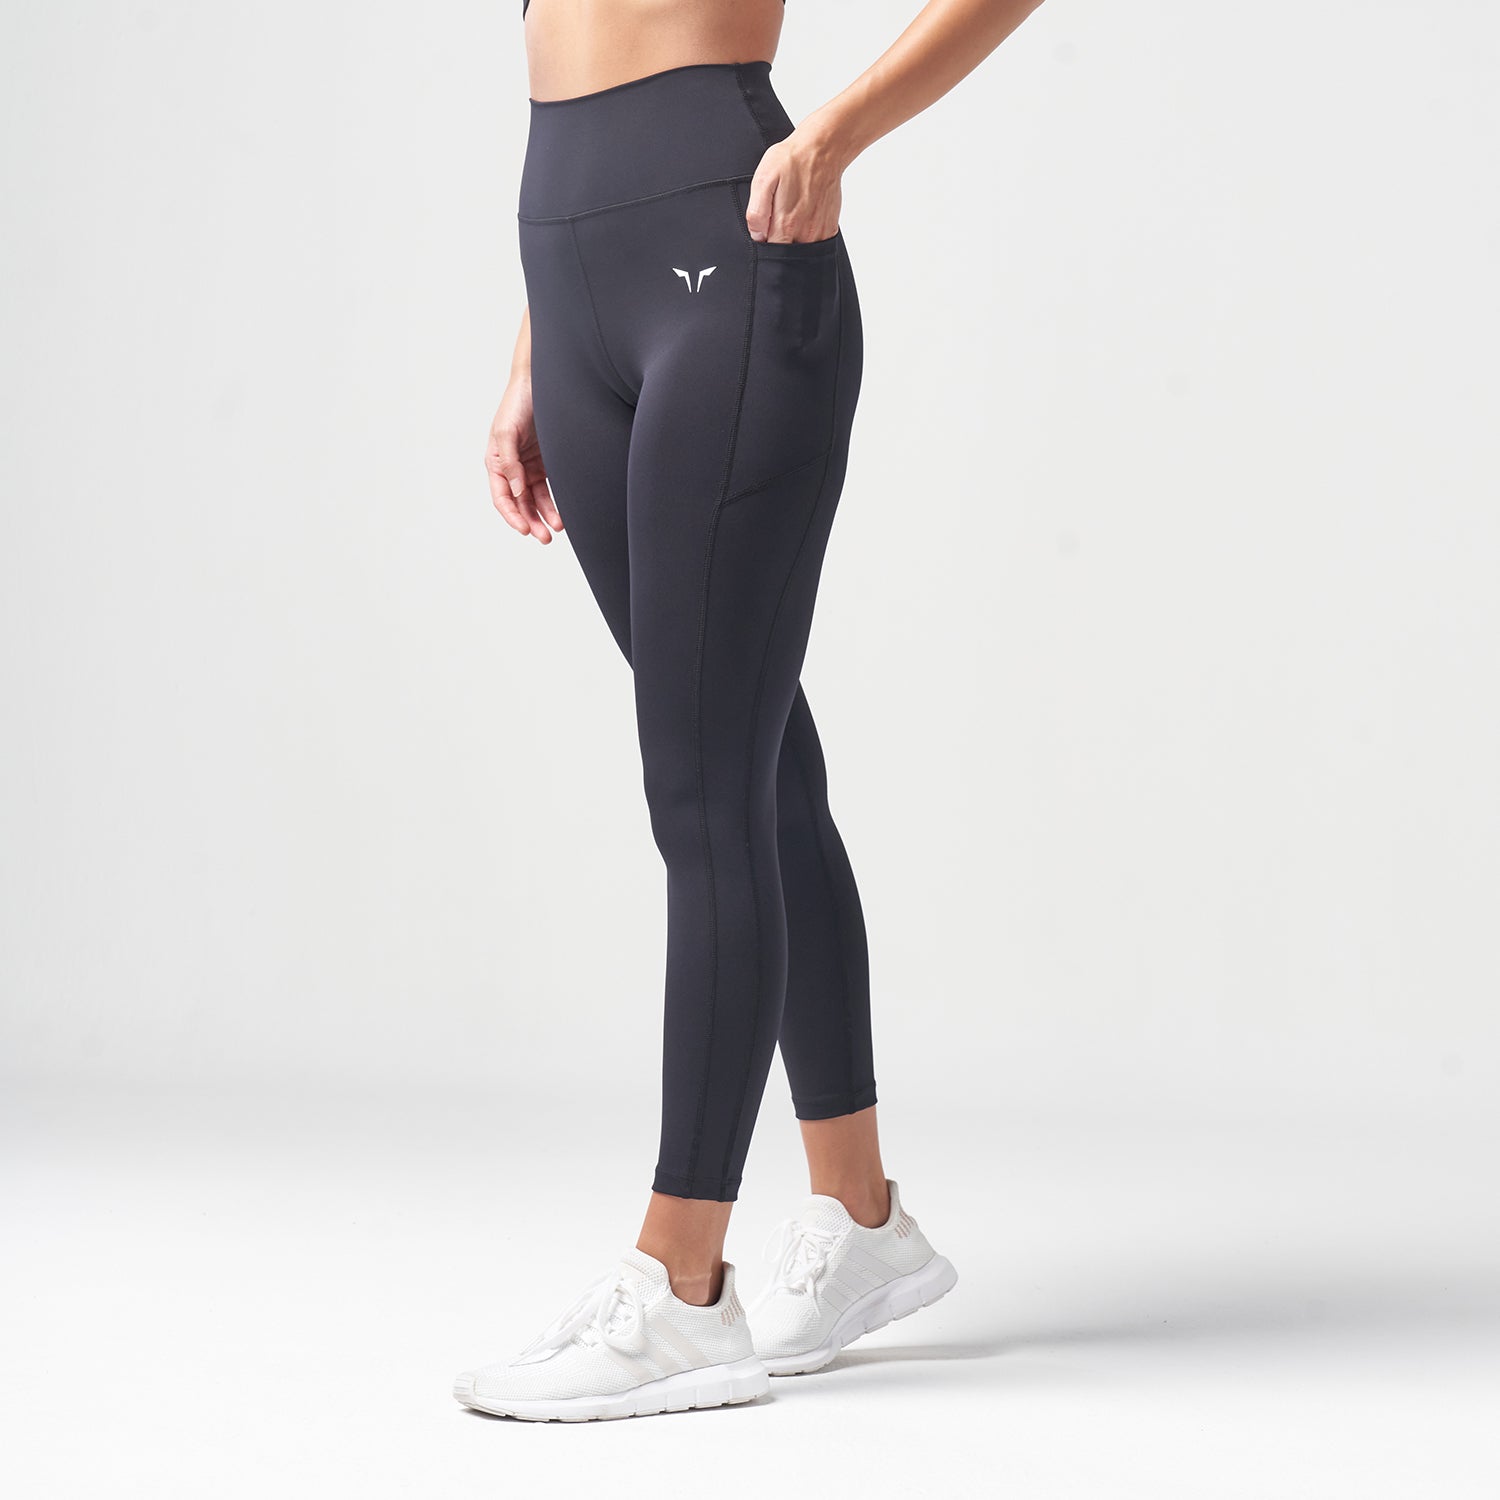 Brilliant Basics Women's Crop Legging - Black - Size XL